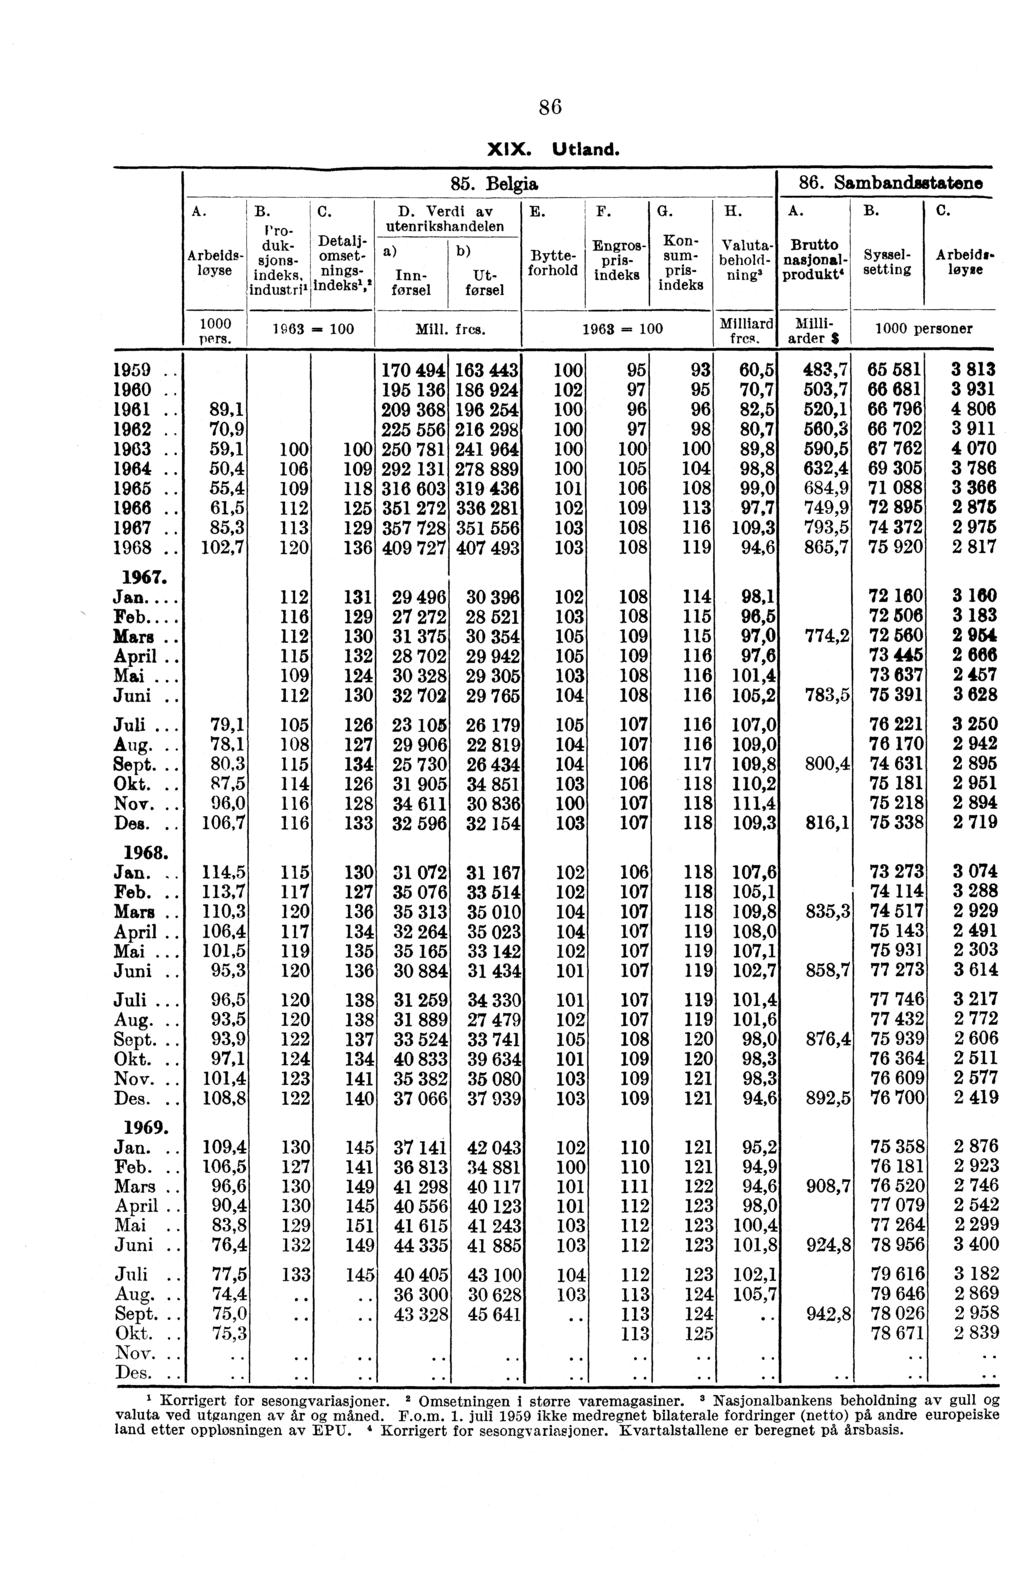 A. Arbeidsløyse 0 pers. B. C. Pro - duk- Detaljsjons. omsetindeks. ningsindustrii Indeks,2 1959 10.. 11.. 89,1 12.. 70,9 13.. 59,1 14. 50,4 15.. 55,4 16.. 61,5 17.. 85,3 18.